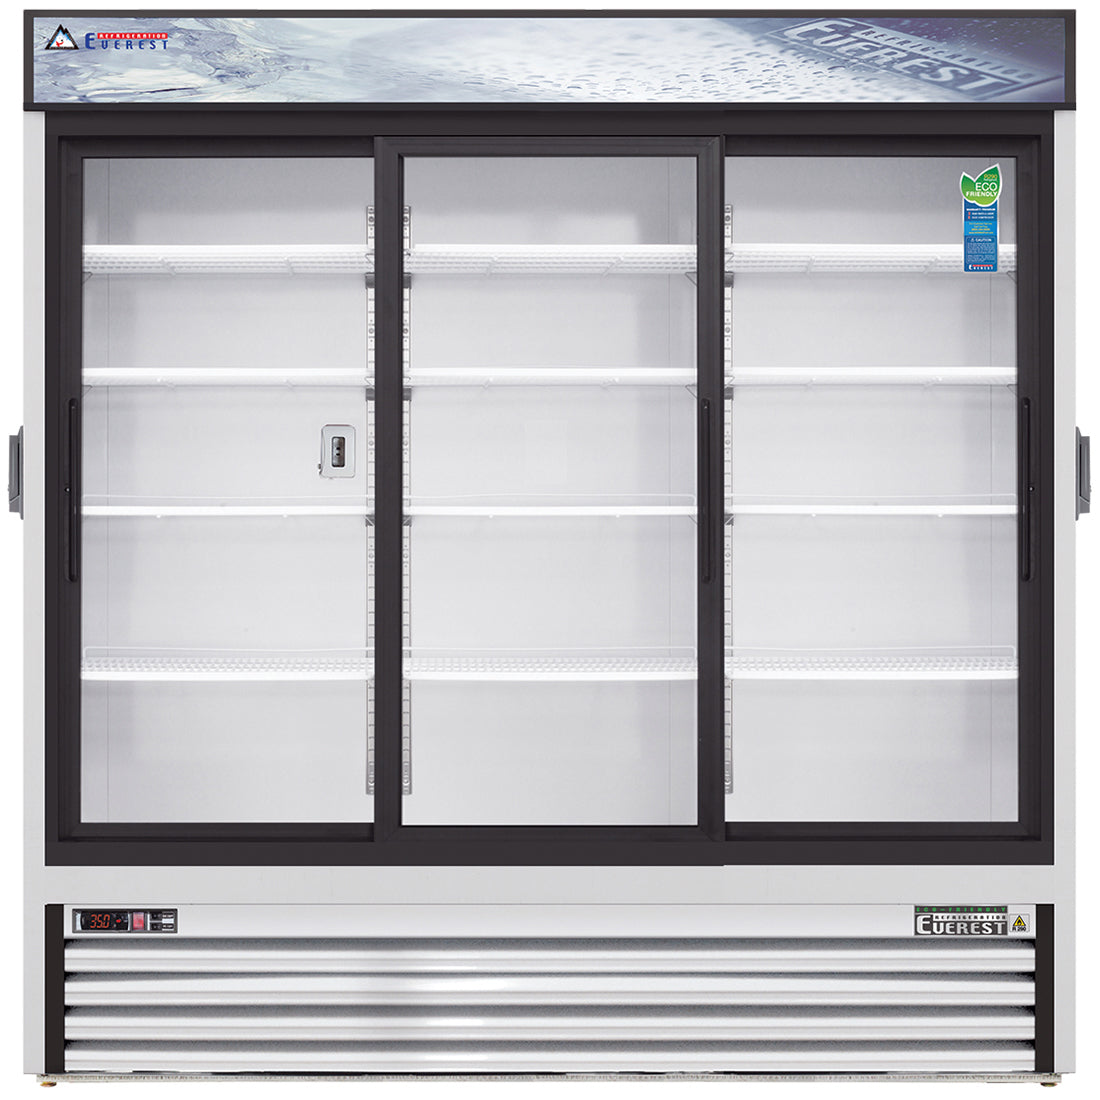 Everest EM Series-EMGR69C White Three Sliding Glass Door Chromatography Refrigerator - 69 Cu. Ft.